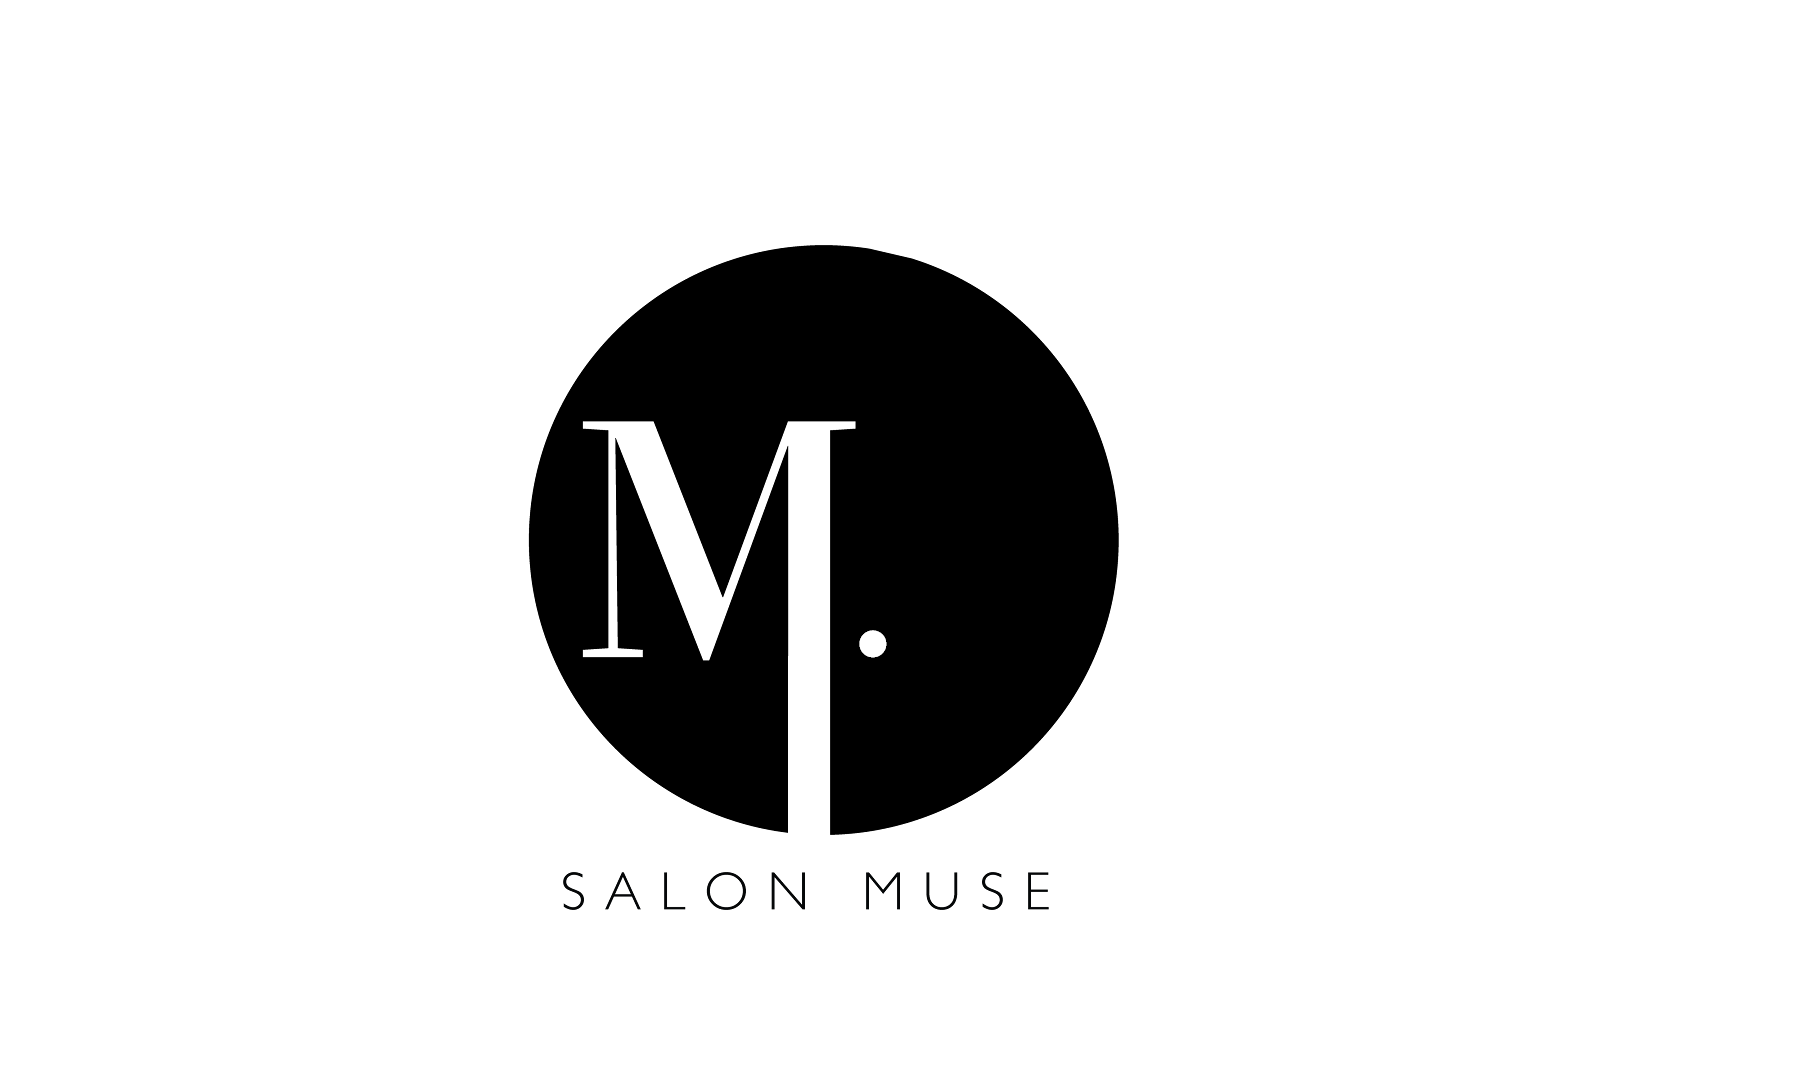 Salon Muse